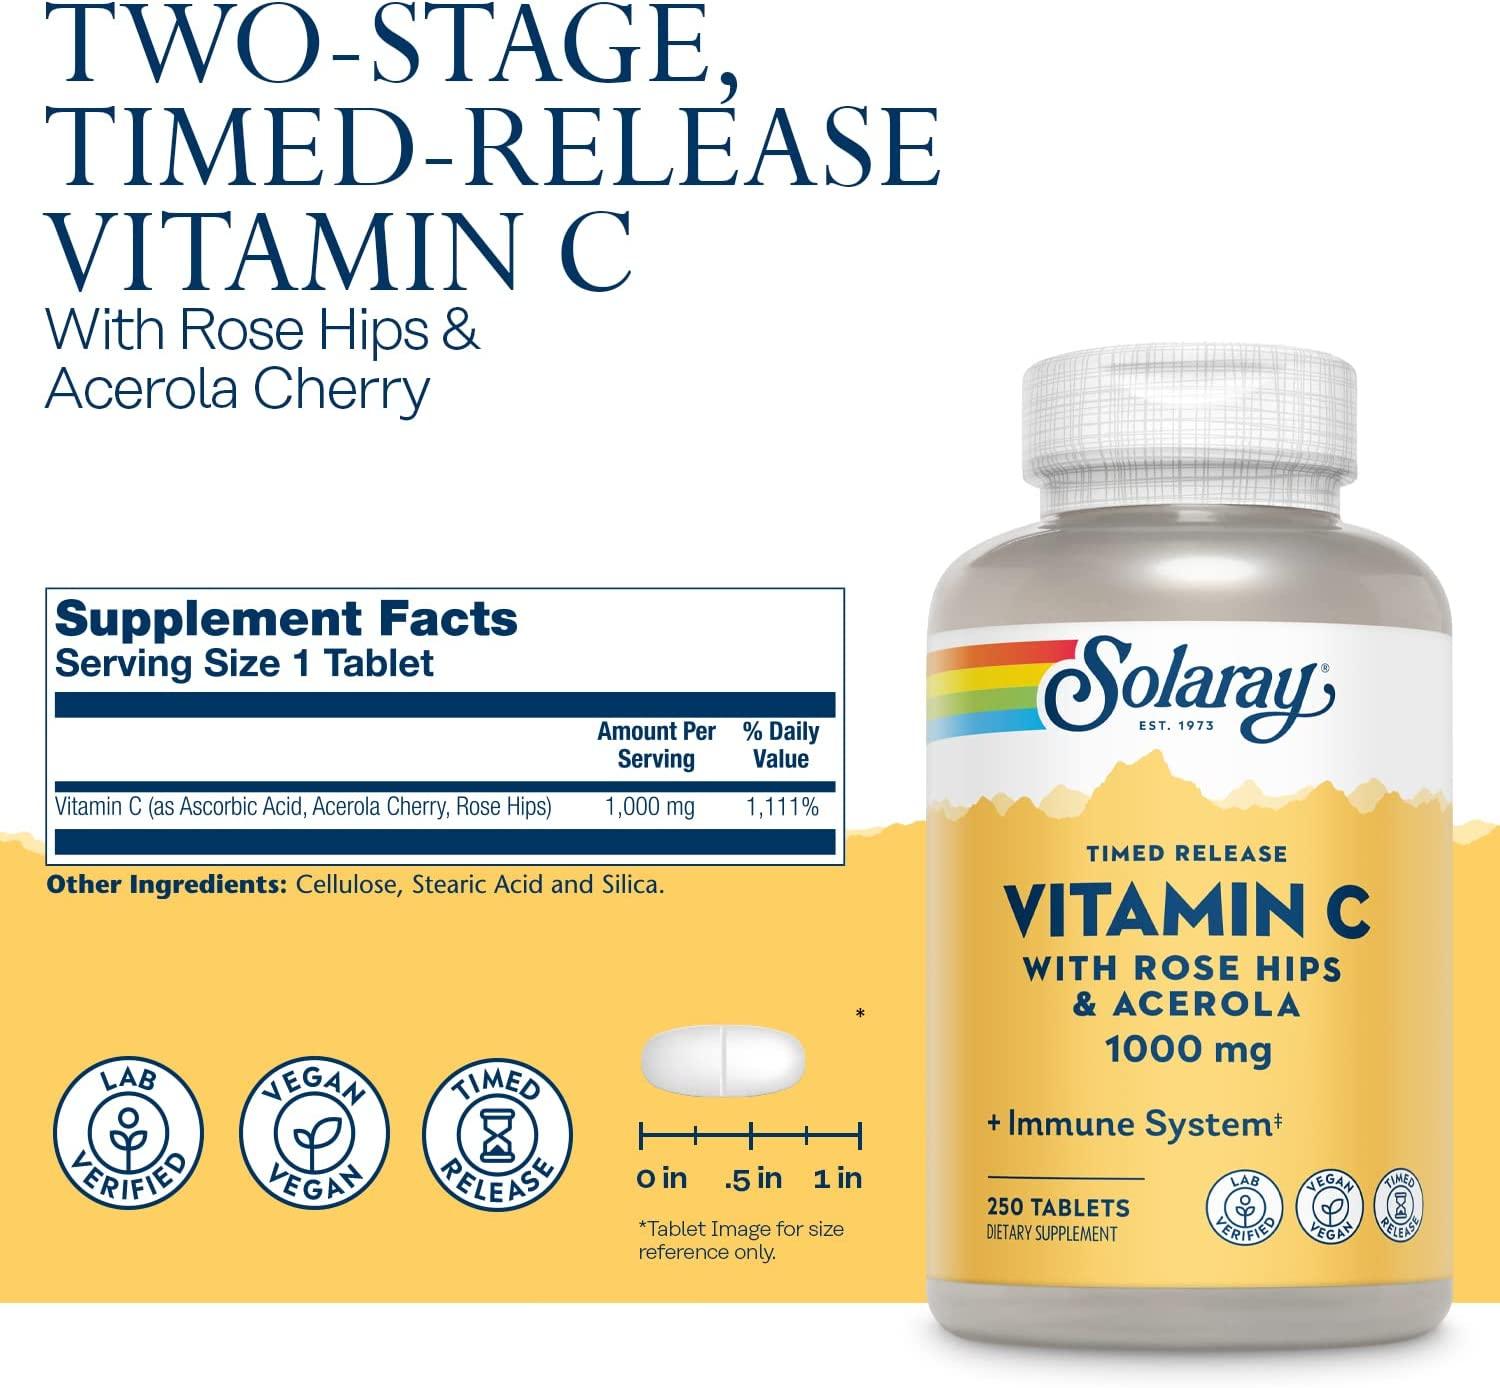 Solaray Vitamine C 1000mg Action Prolongée - mondialpharma.com